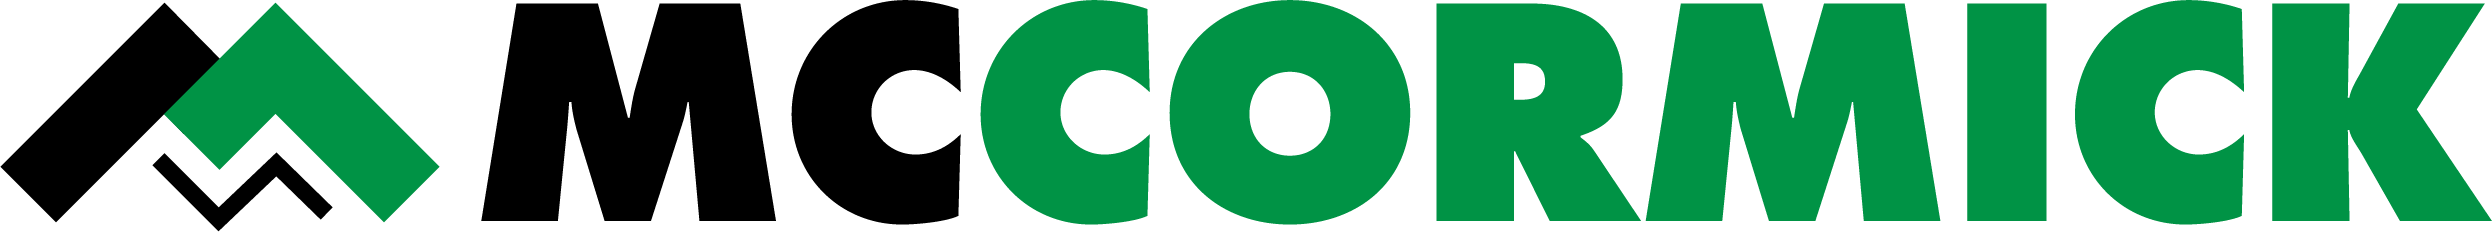 mccormick logo